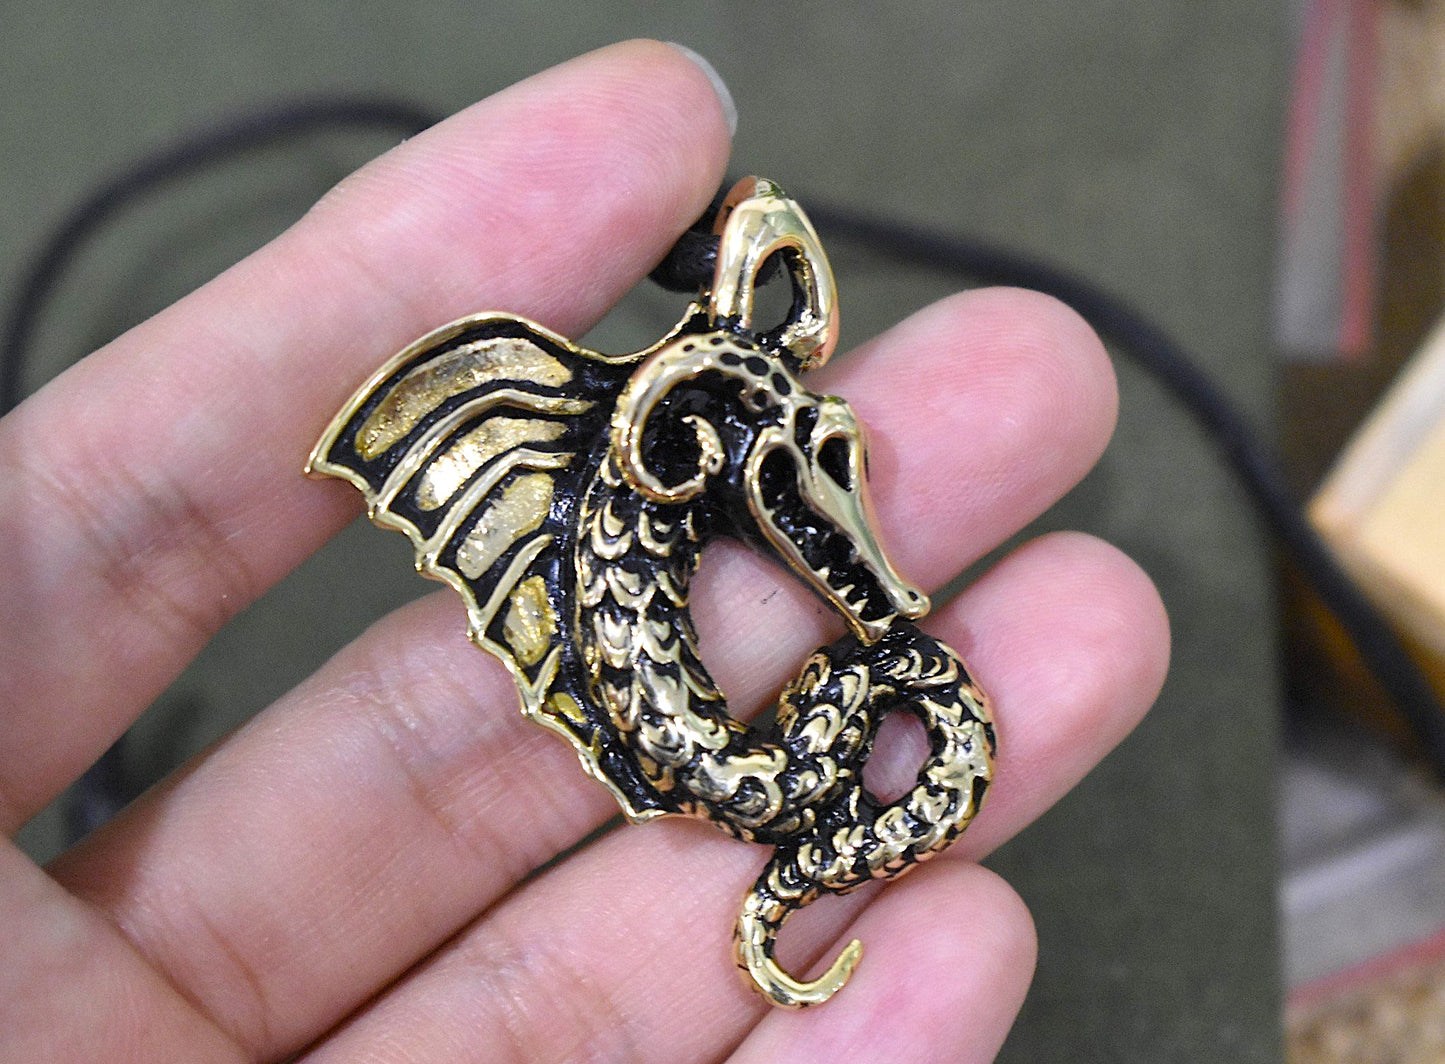 Fire Dragon Handmade Gold Brass Charm Necklace Pendant Jewelry